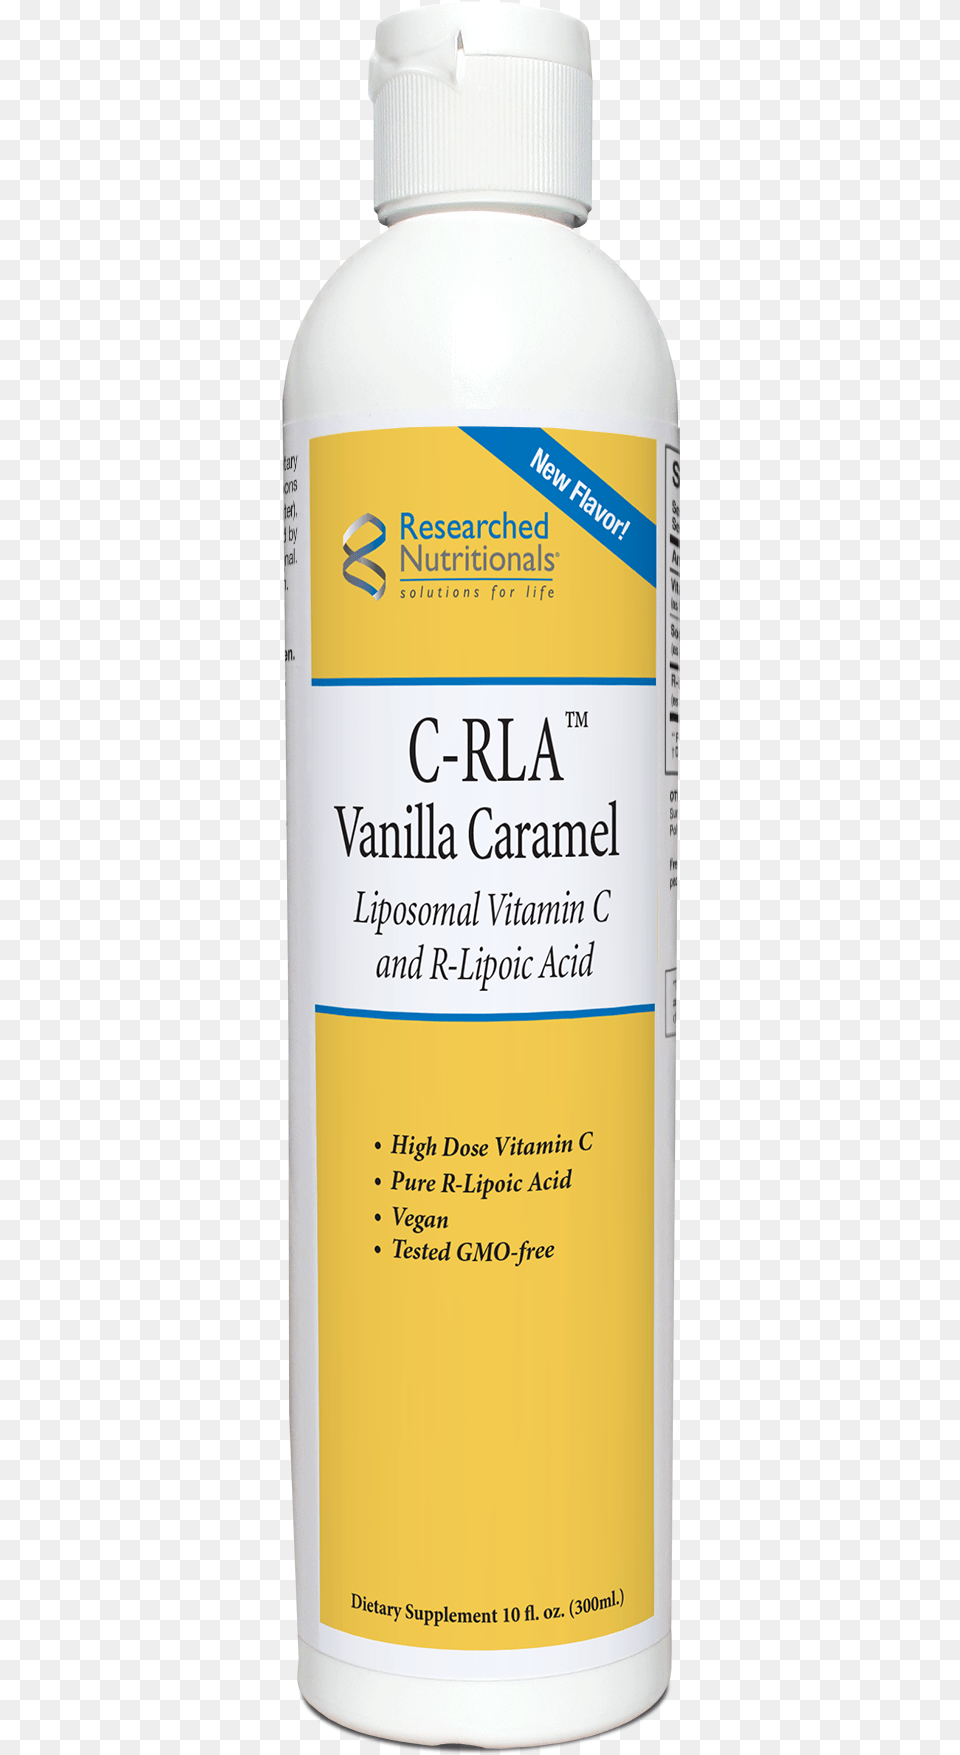 C Rla Vanilla Caramel 1218 Cosmetics, Bottle Png Image